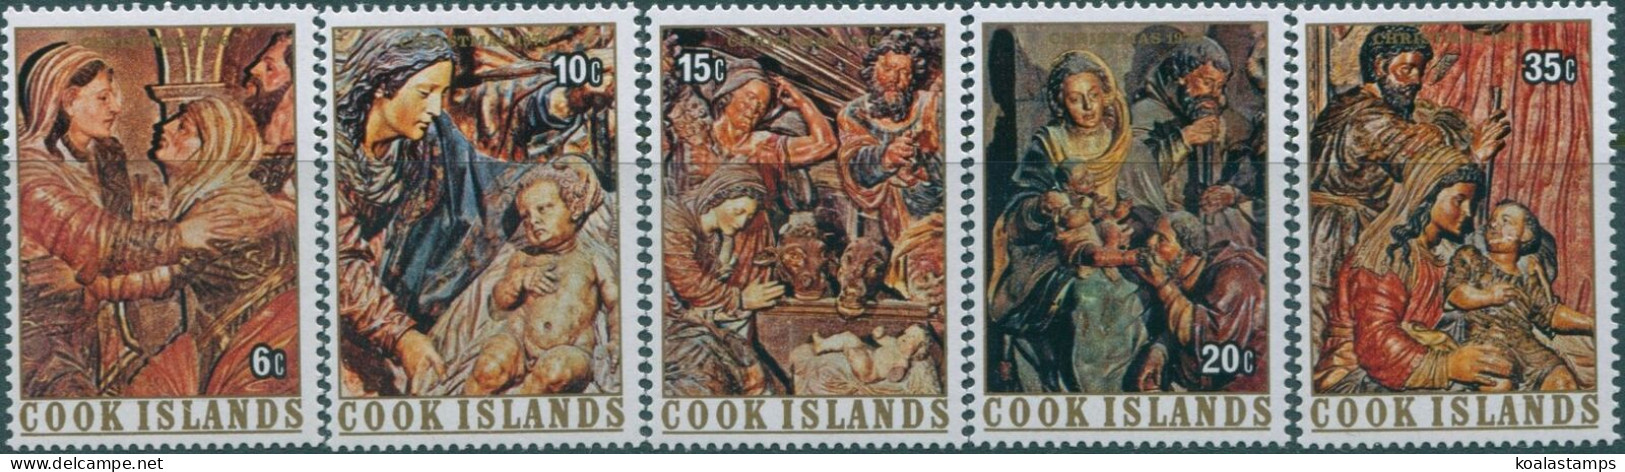 Cook Islands 1976 SG556-560 Christmas Set MNH - Cook